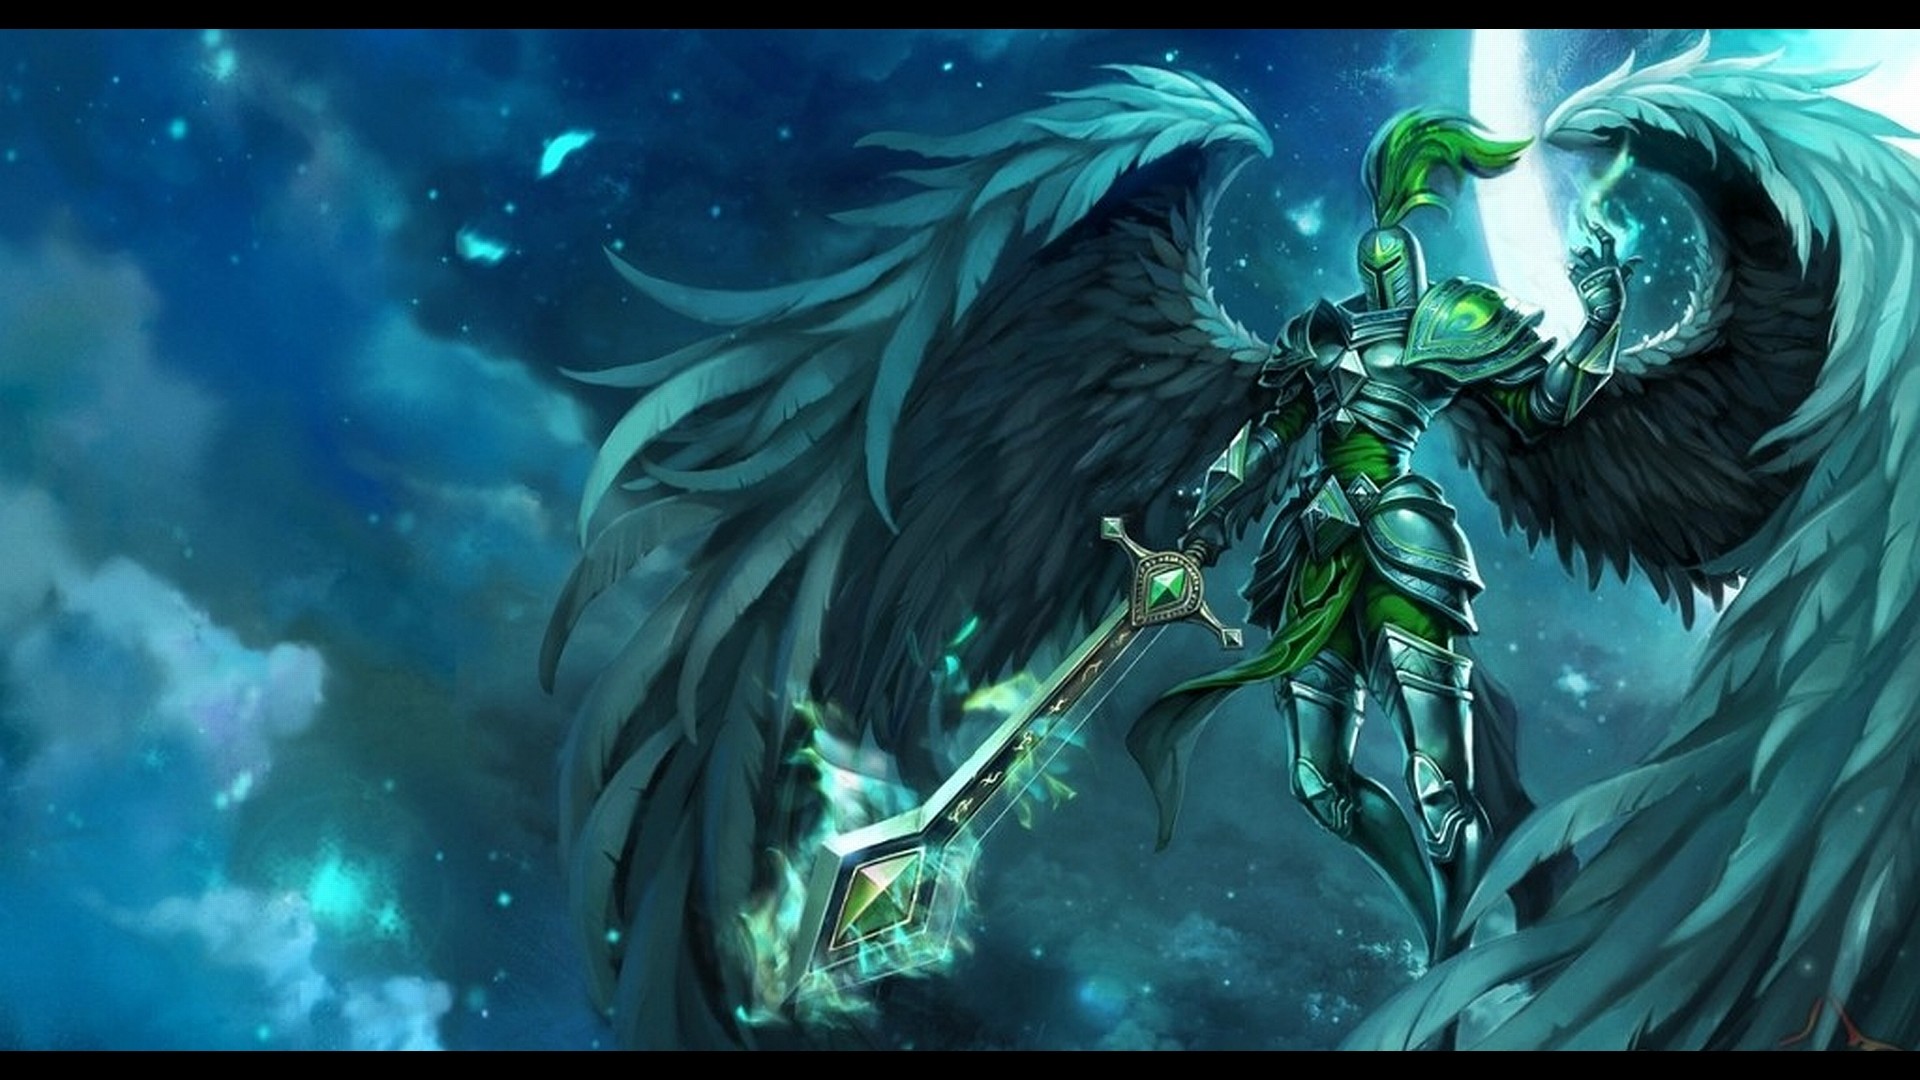 1920x1080 League of Legends fantasy art warriors angels magic armor wallpaper |   | 37729 | WallpaperUP